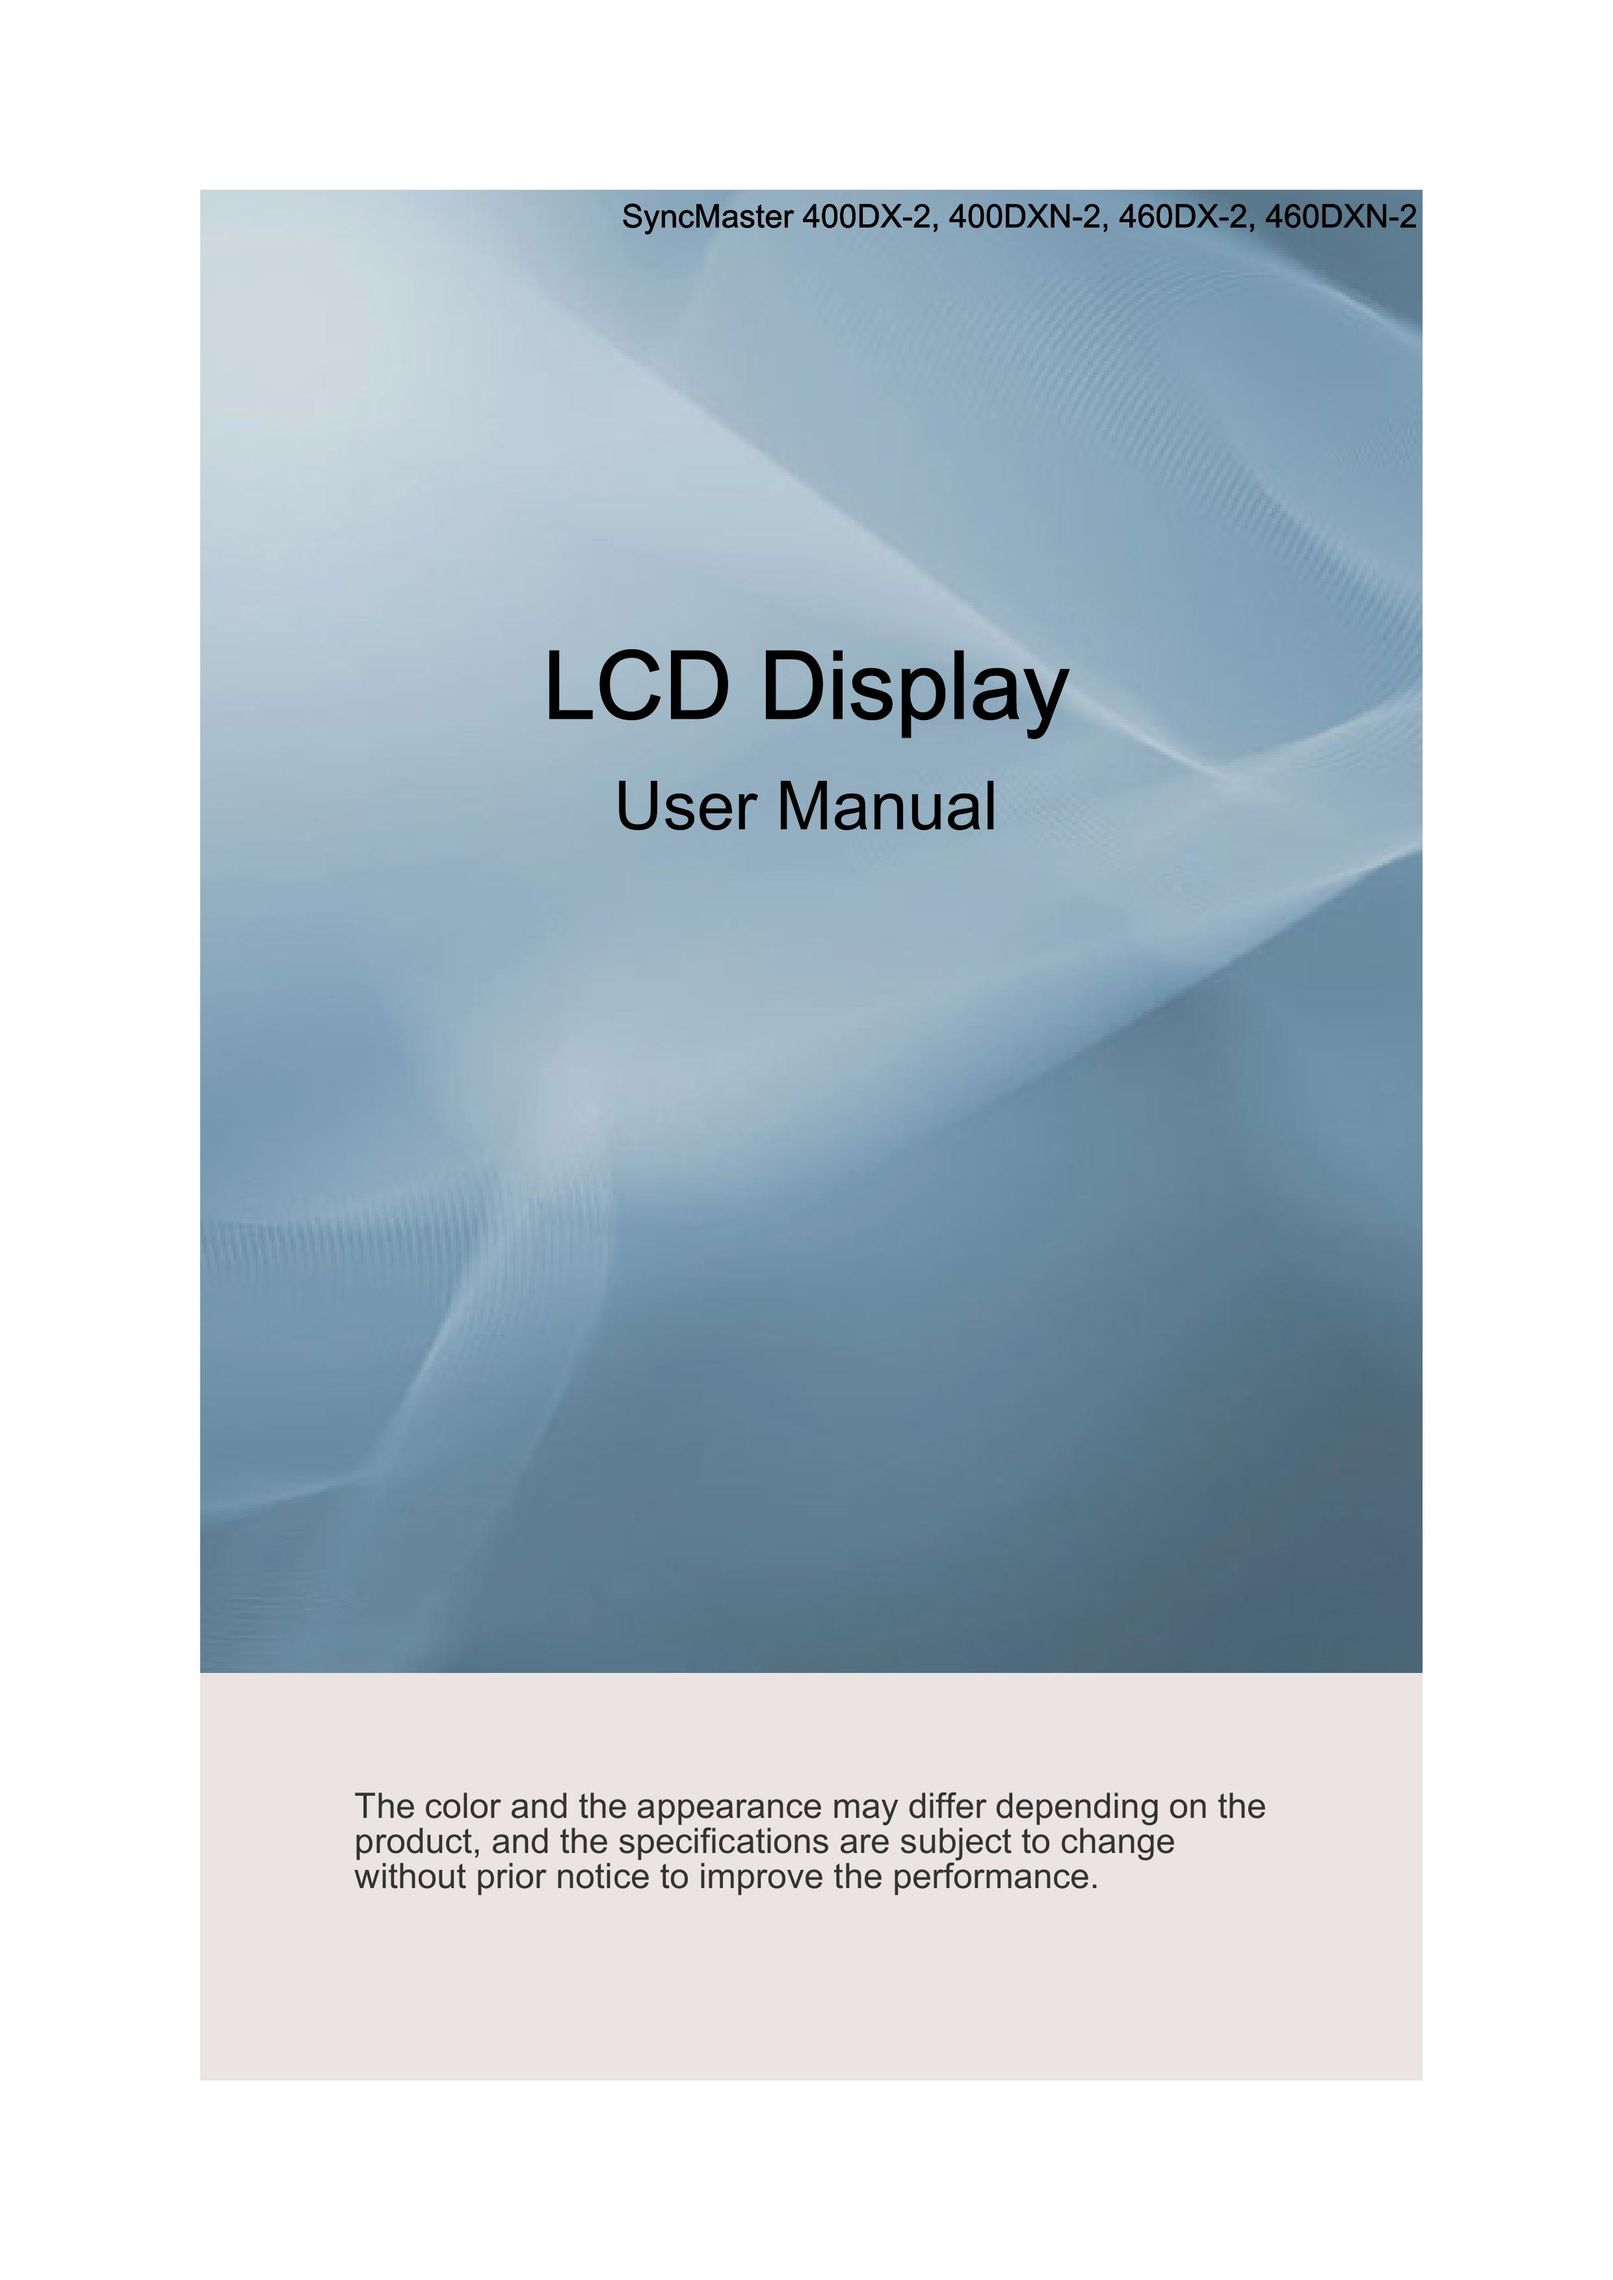 Samsung 400DX-3 Flat Panel Television User Manual